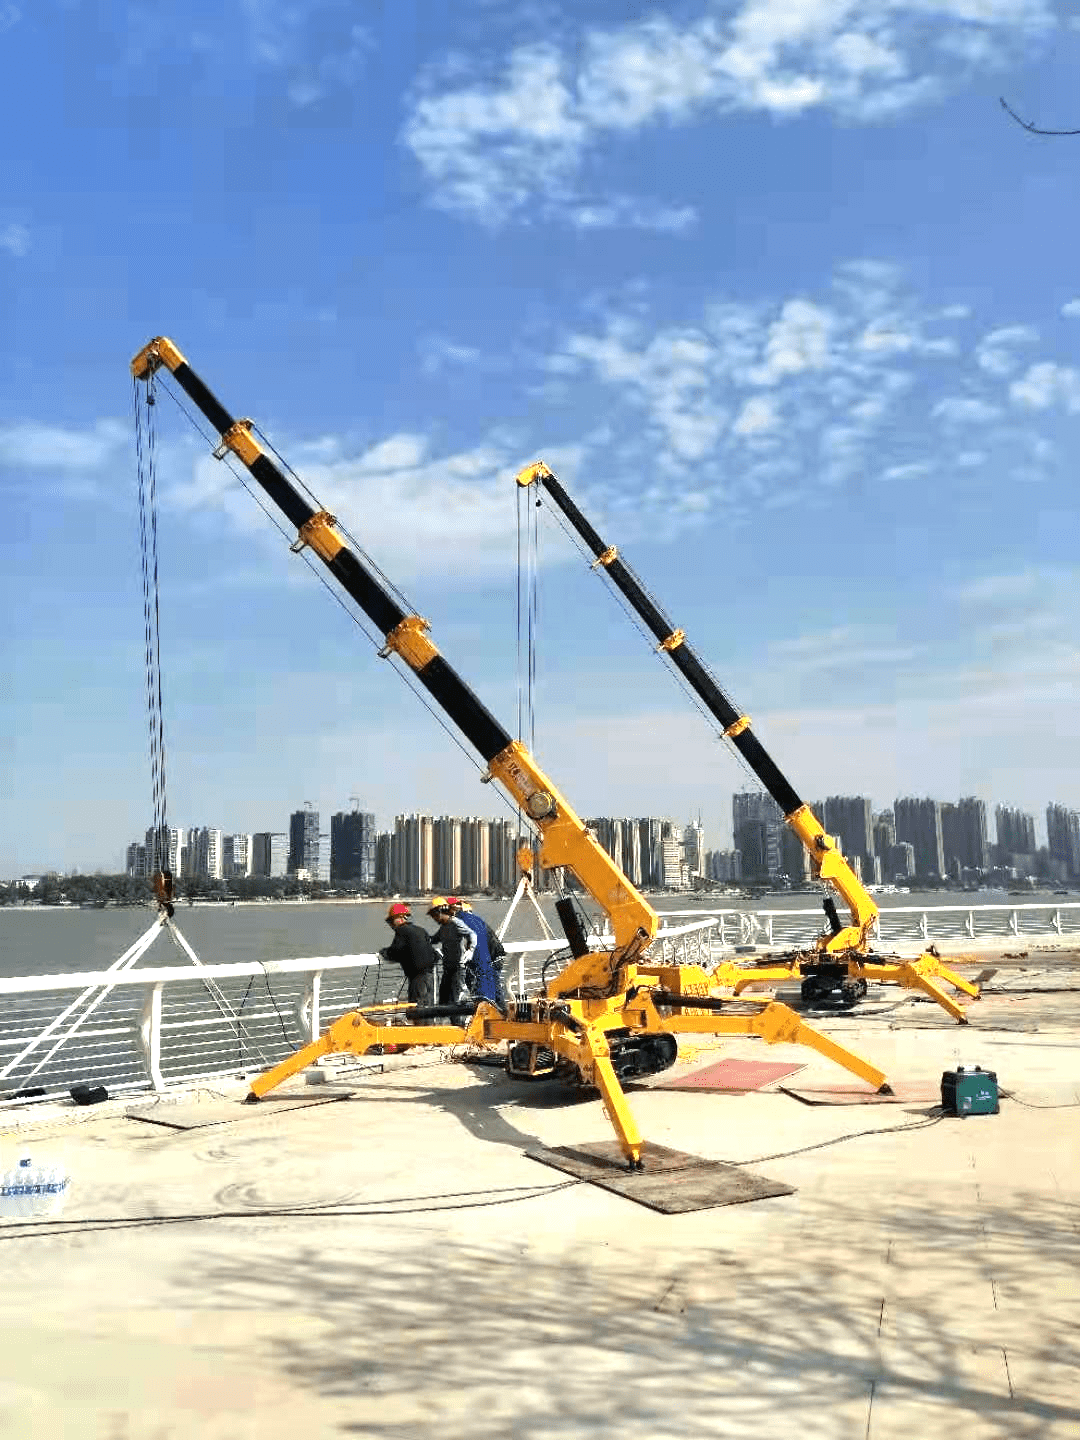 Kebu spider crane helps city construction